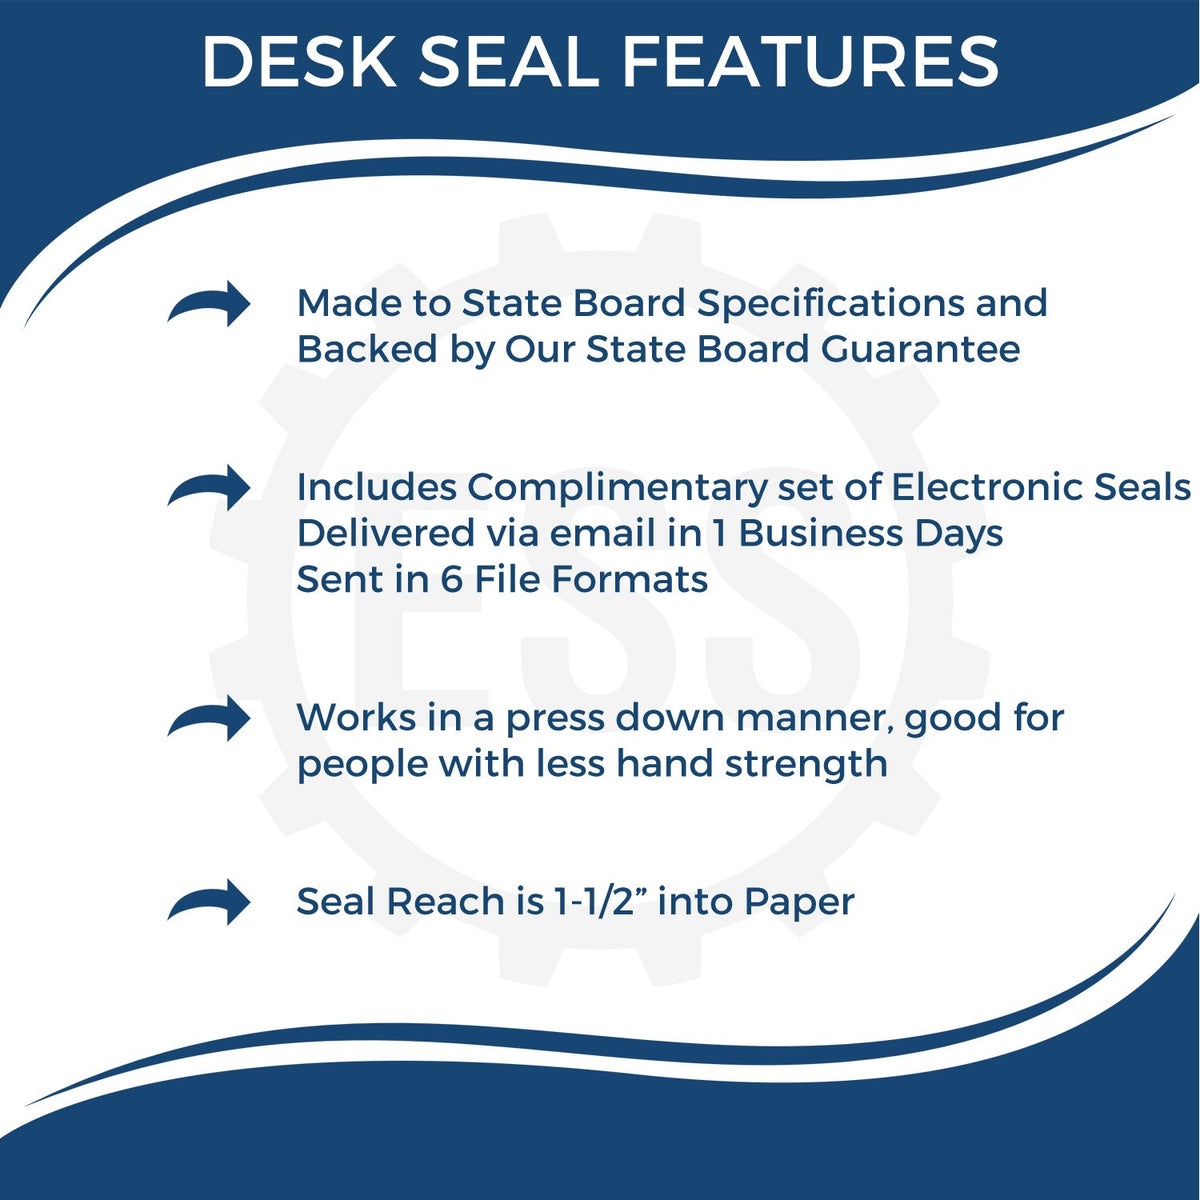 District of Columbia Engineer Desk Seal